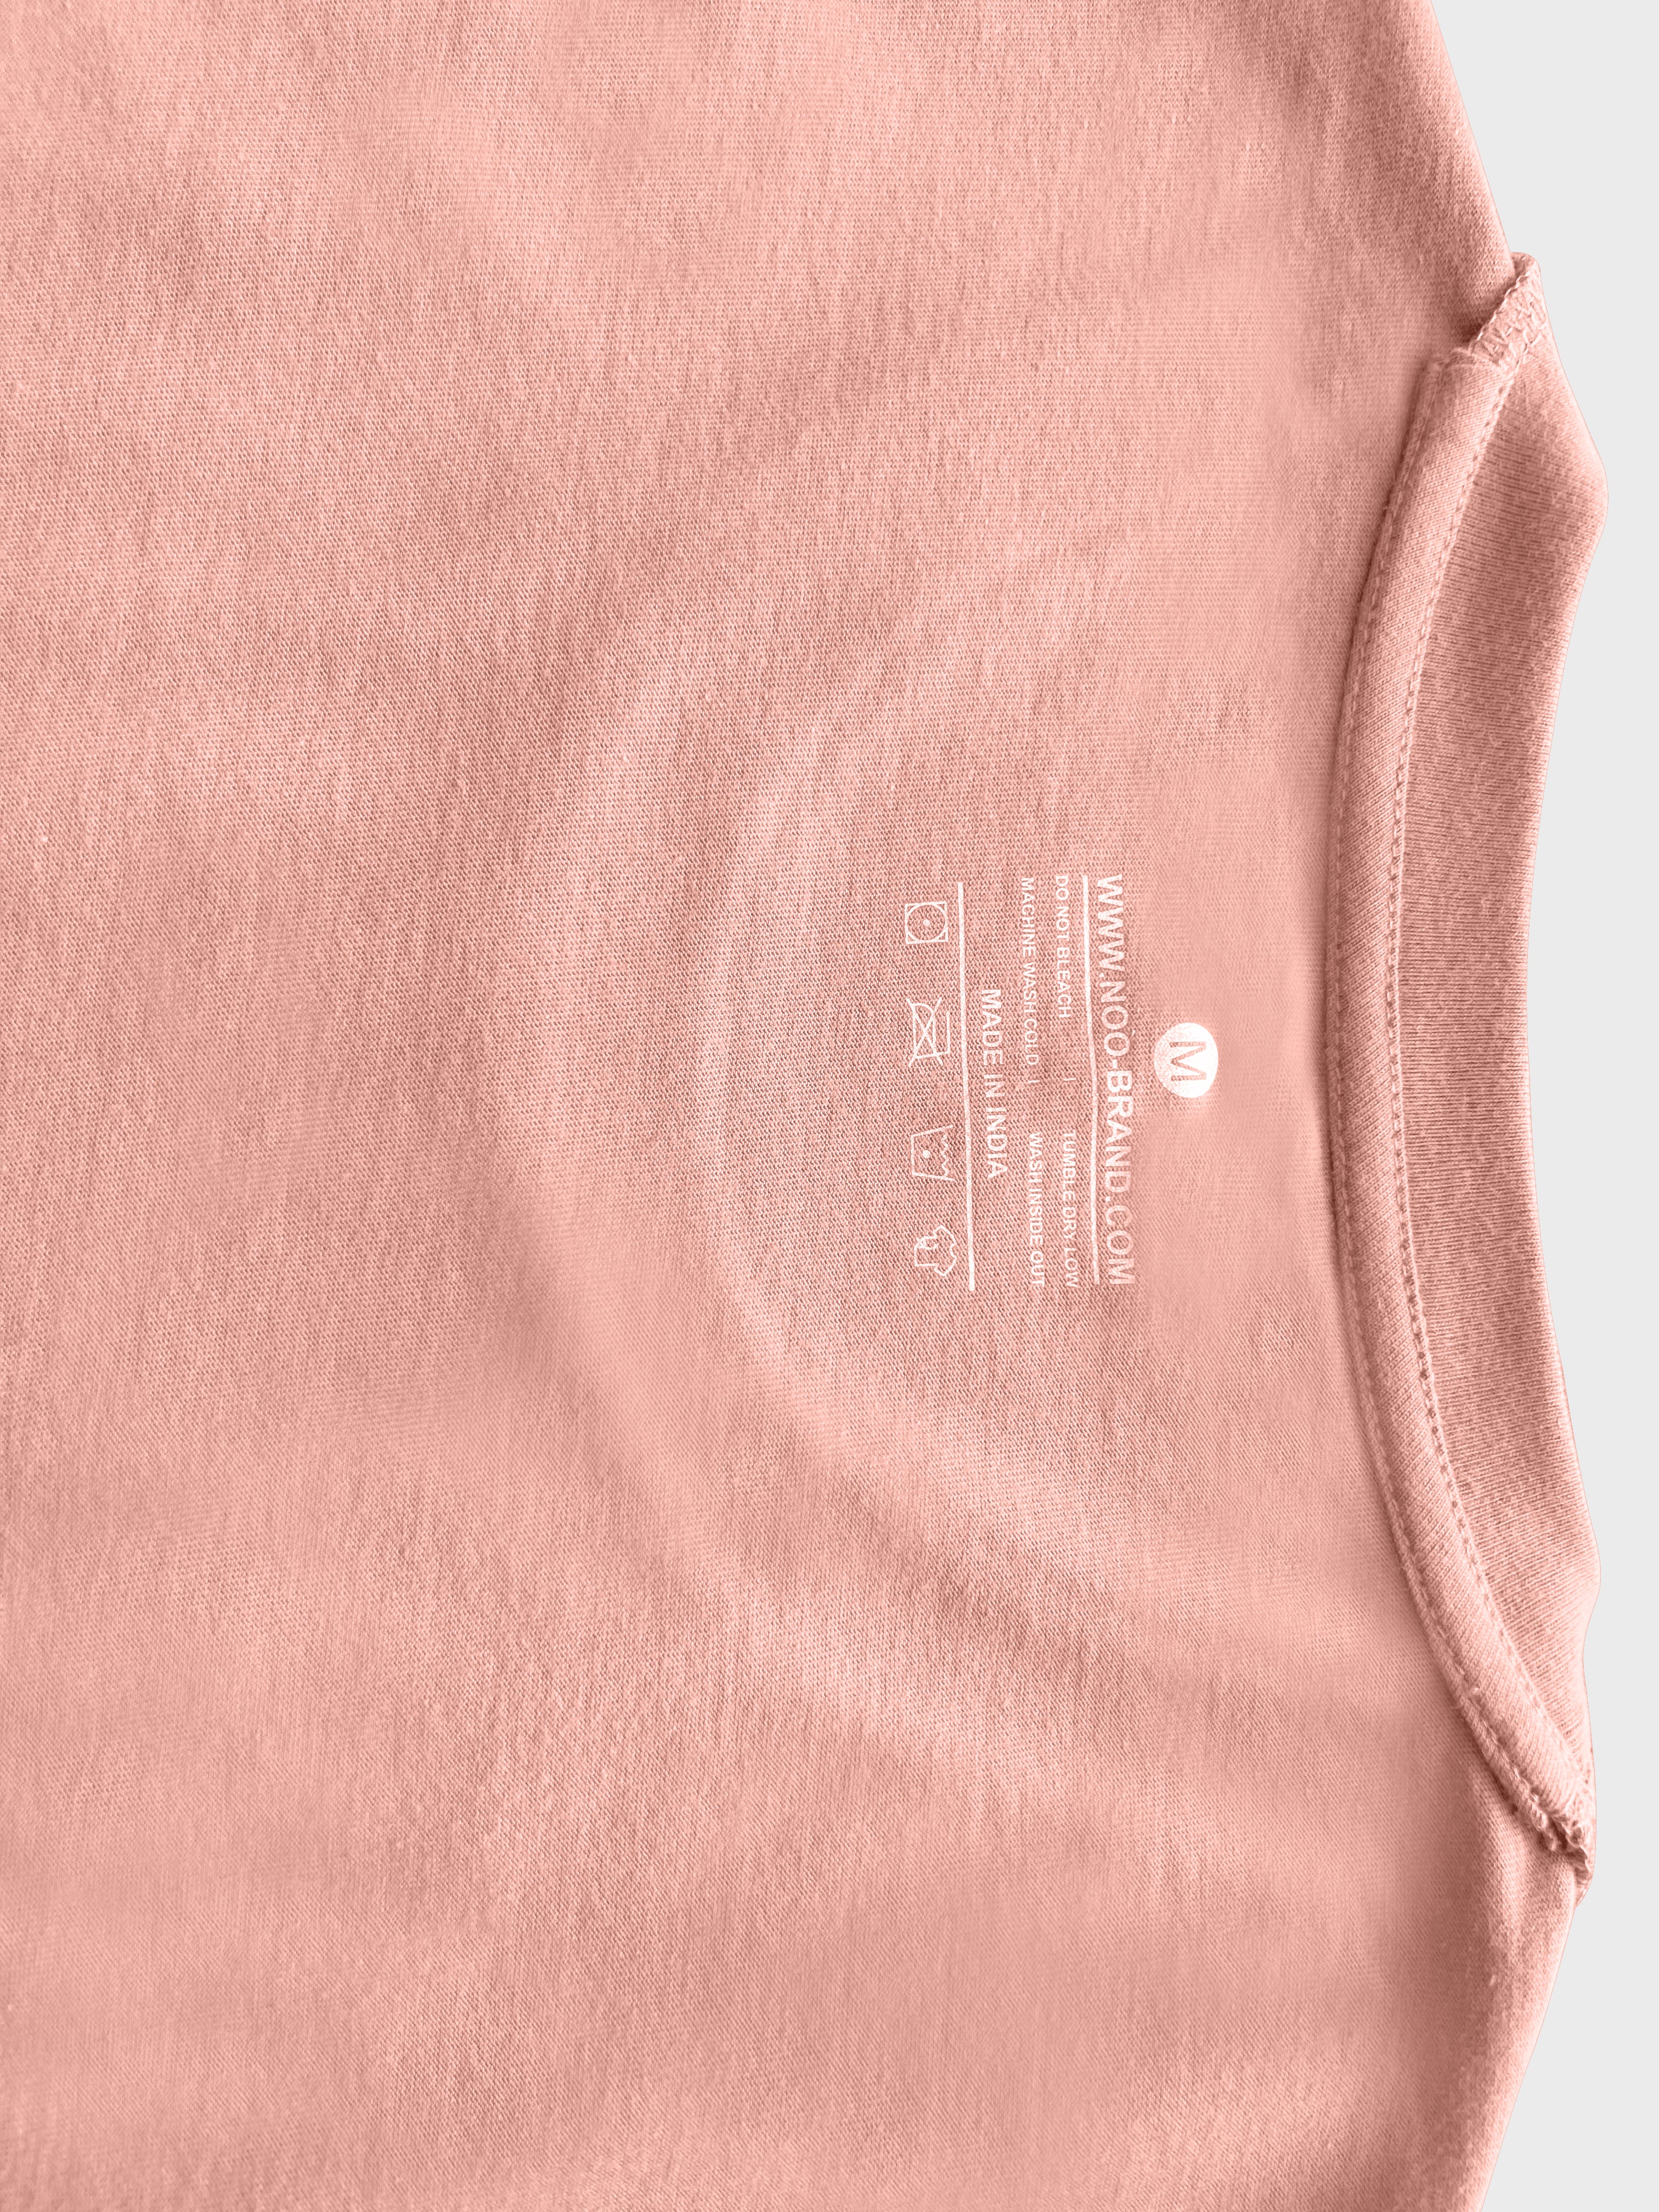 Crew Neck Desert Pink blank T-shirt with NOO-BRAND Label